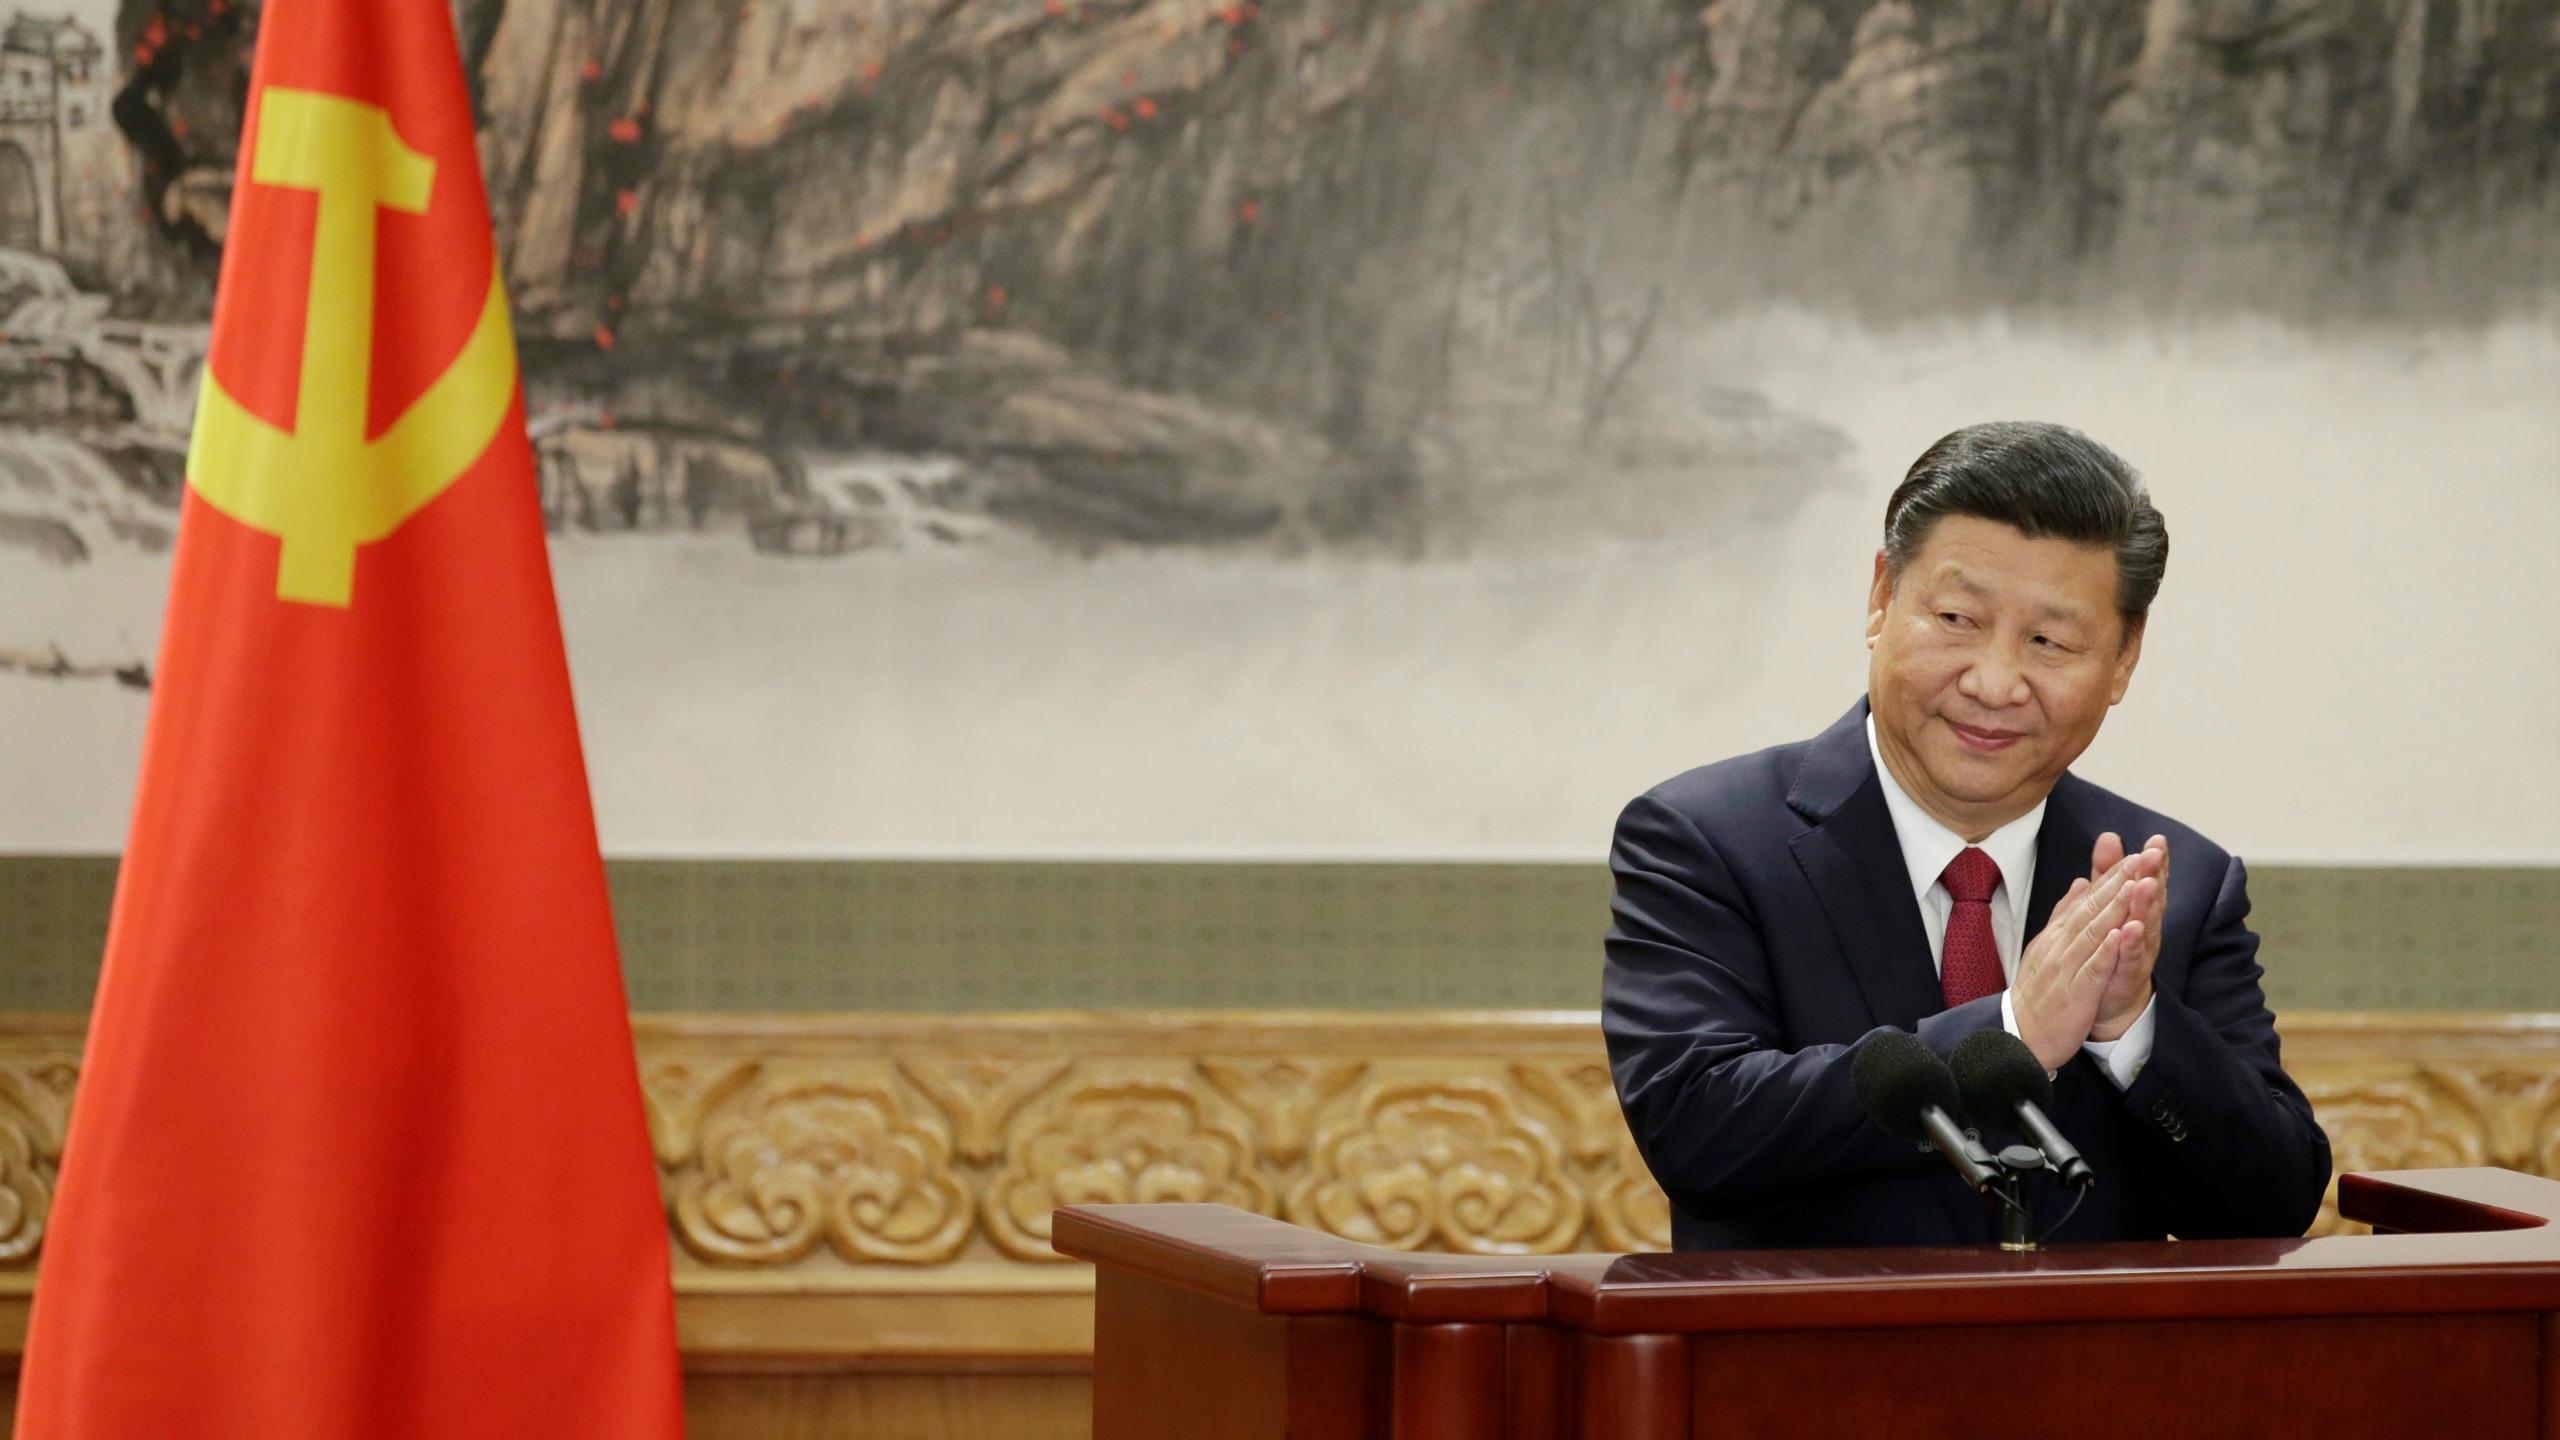 China Gives Xi Jinping Its Mao